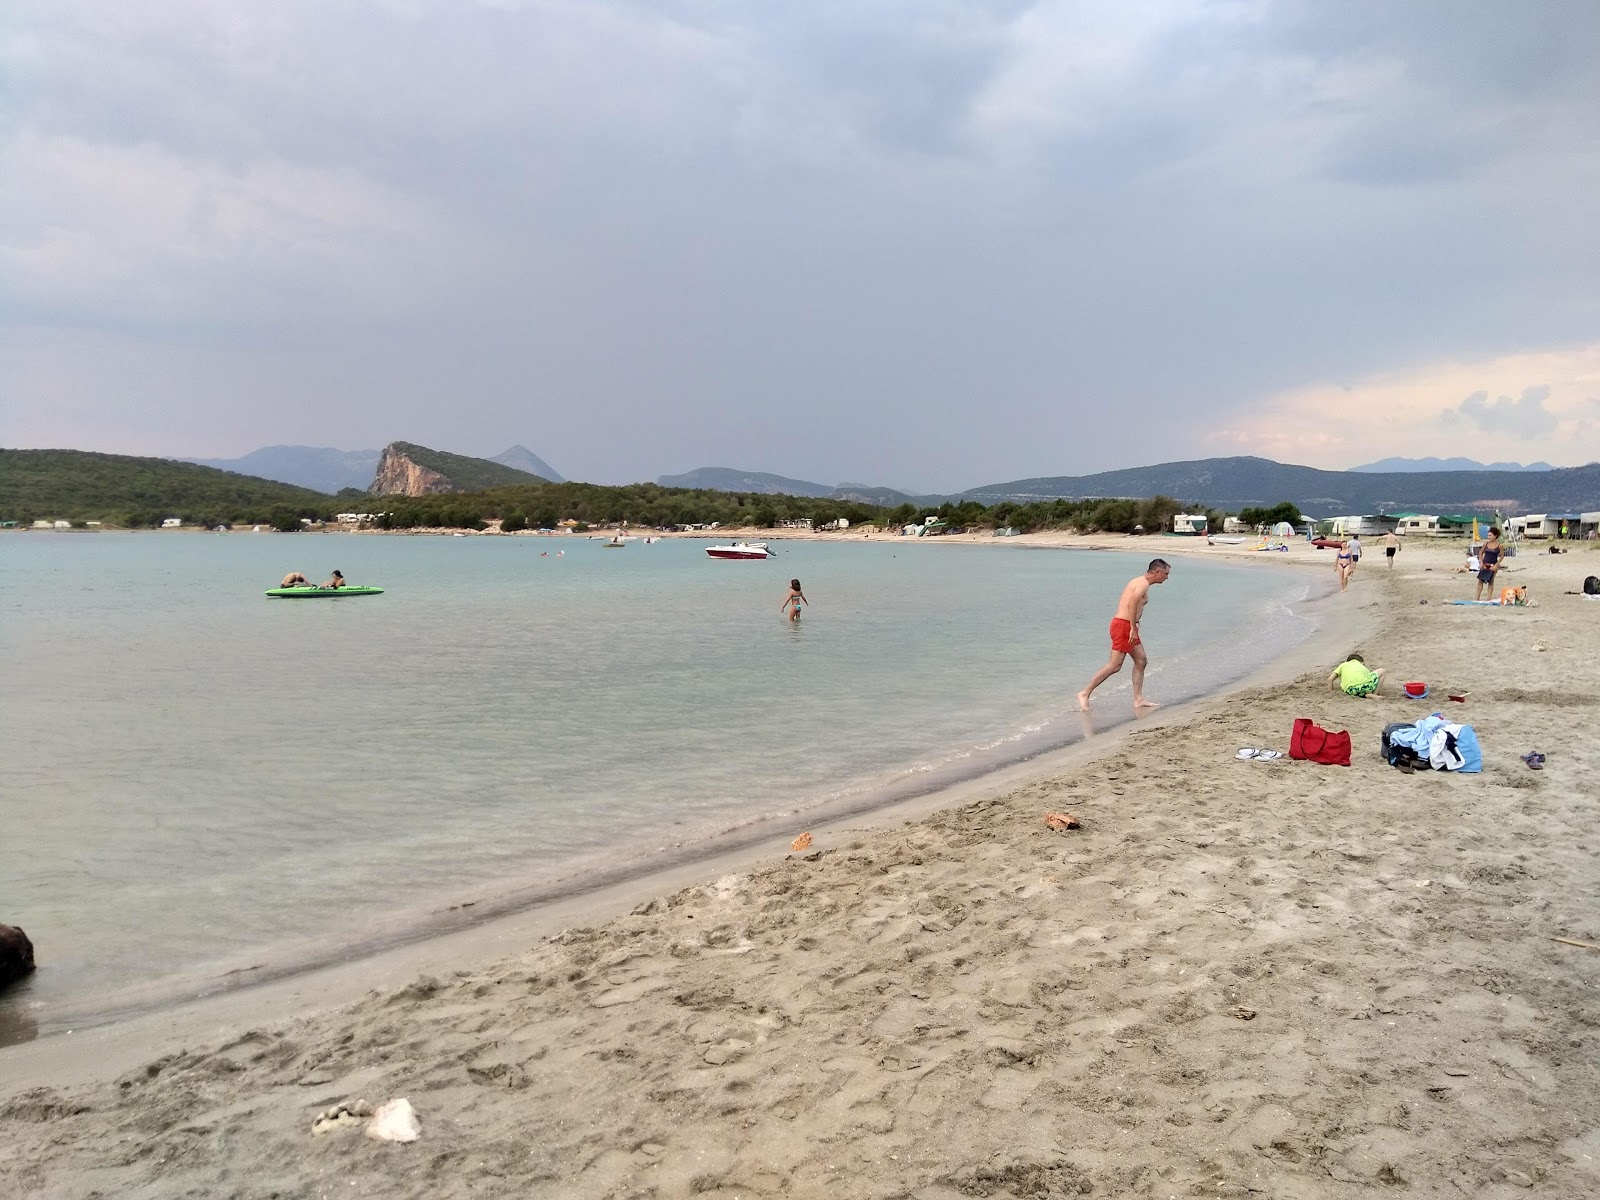 Foto de Kerentza beach - lugar popular entre os apreciadores de relaxamento